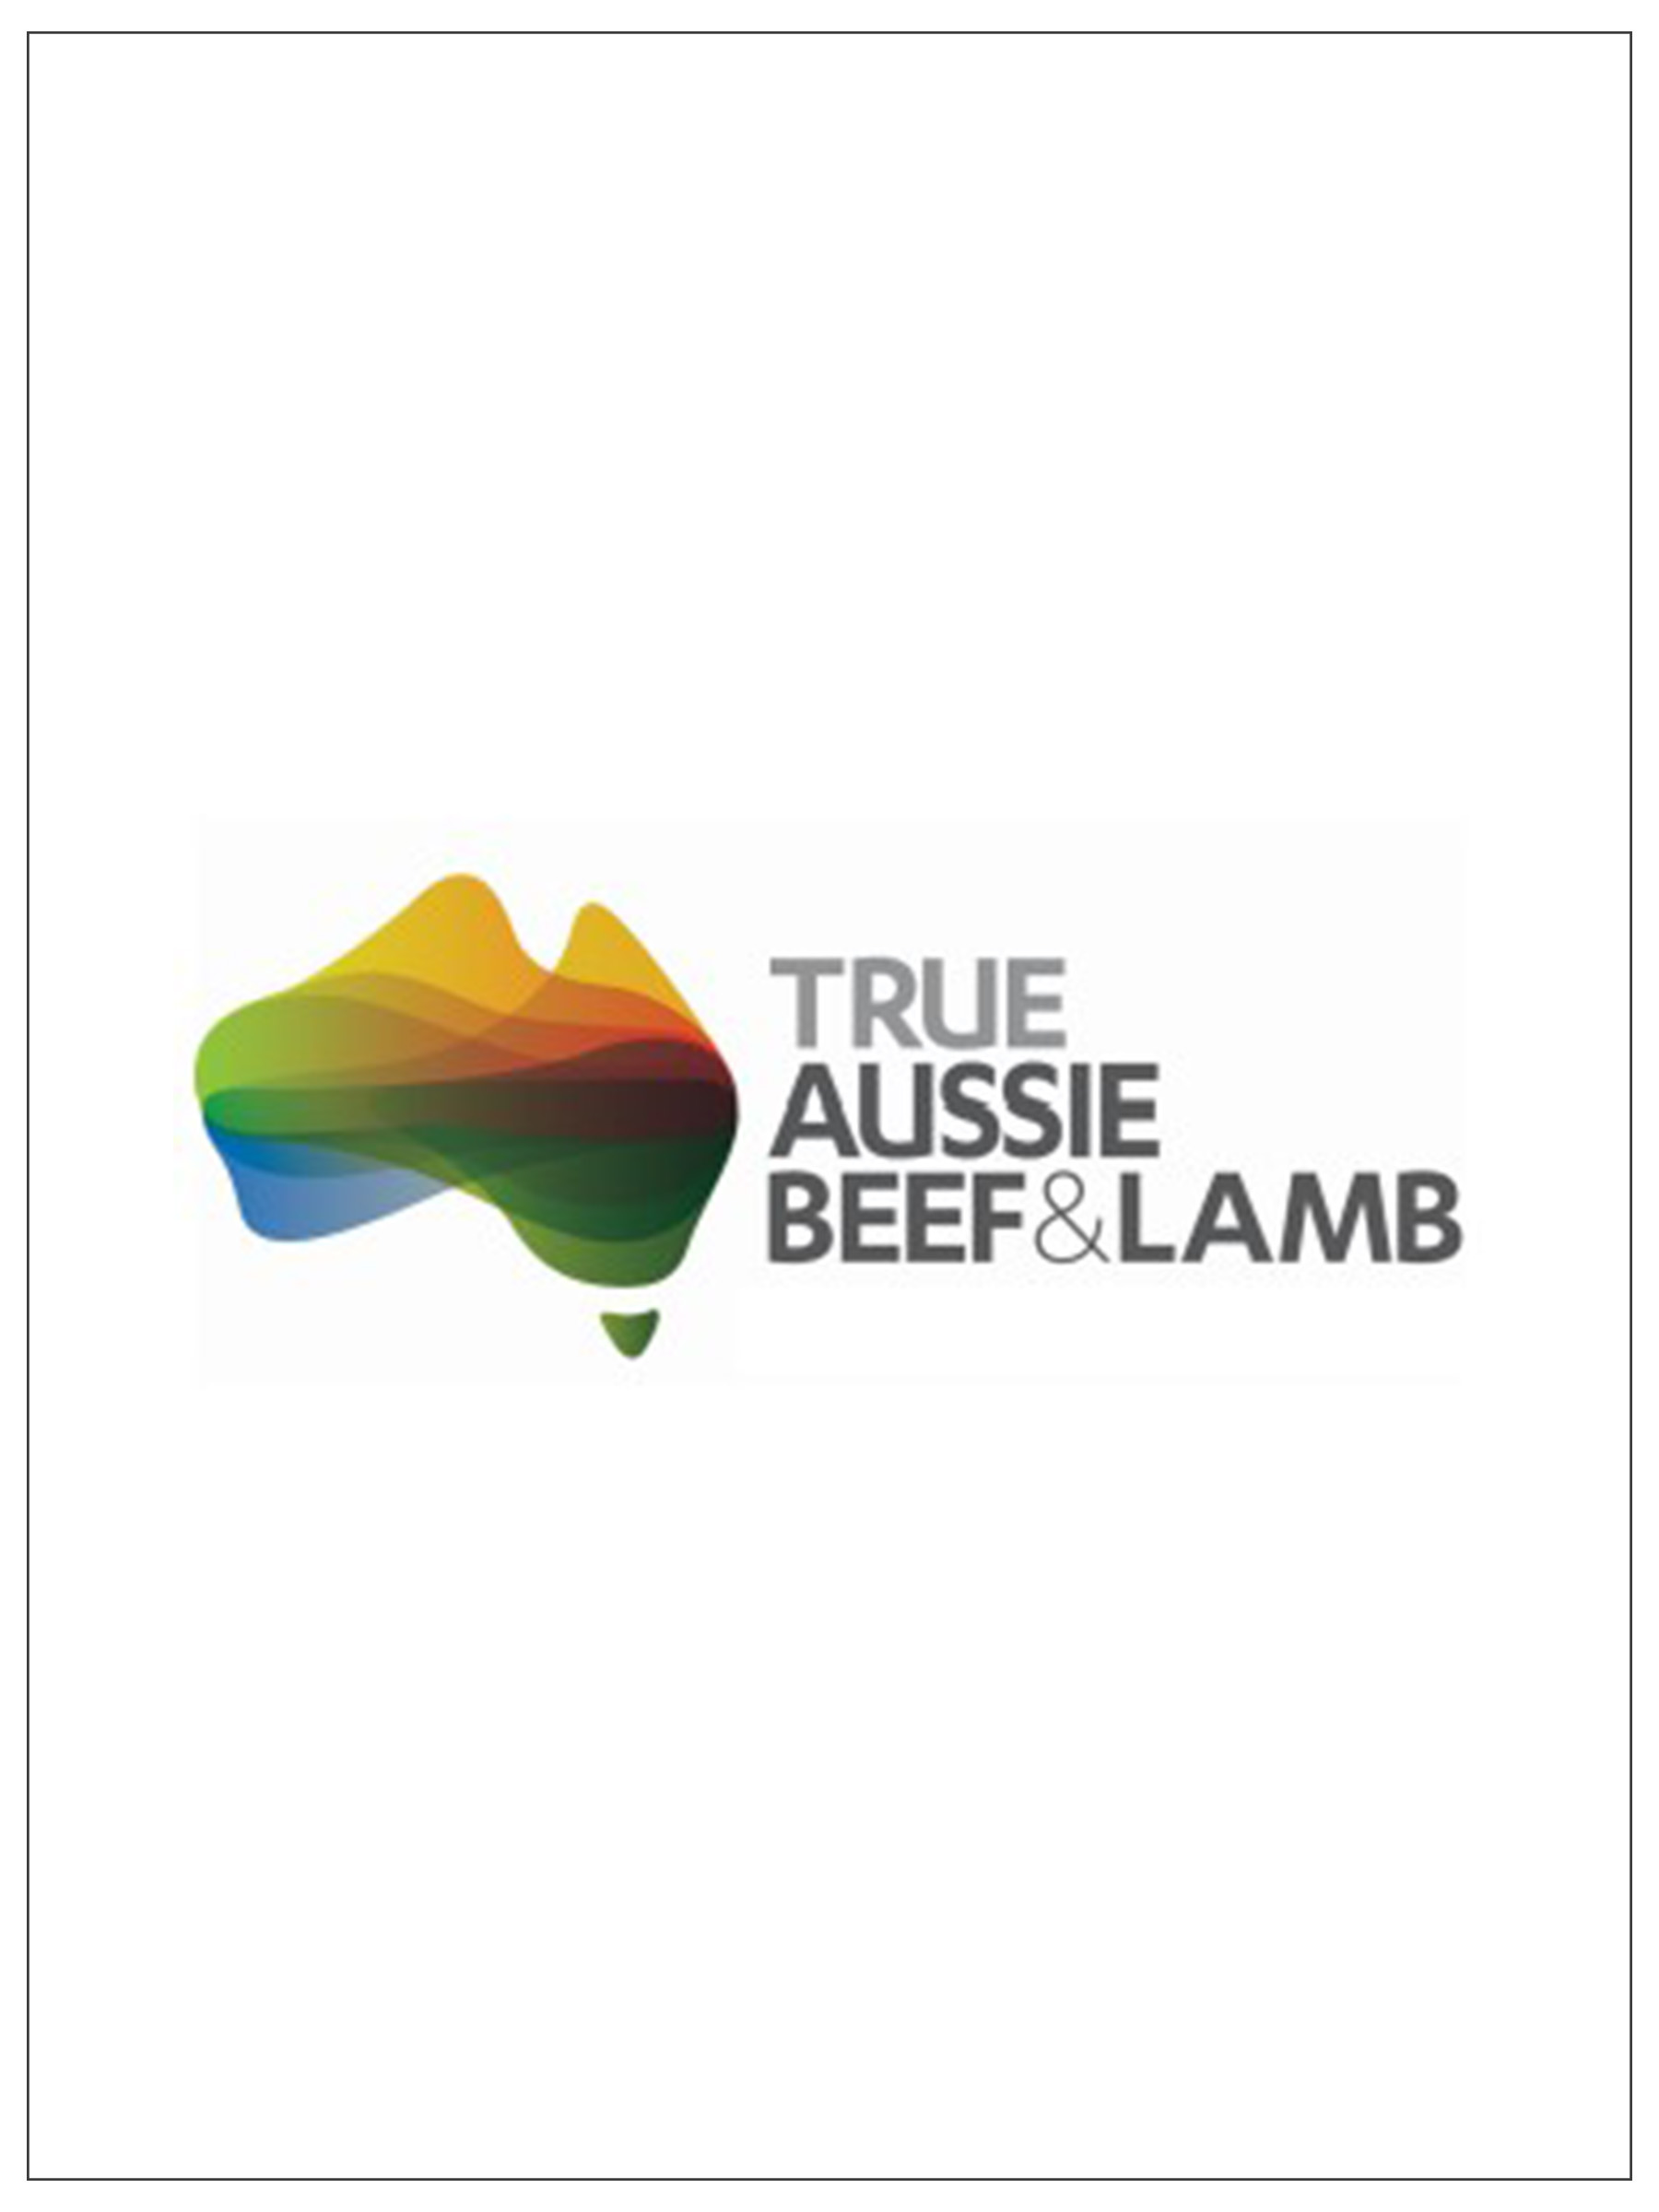 True Aussie Beef & Lamb Ad